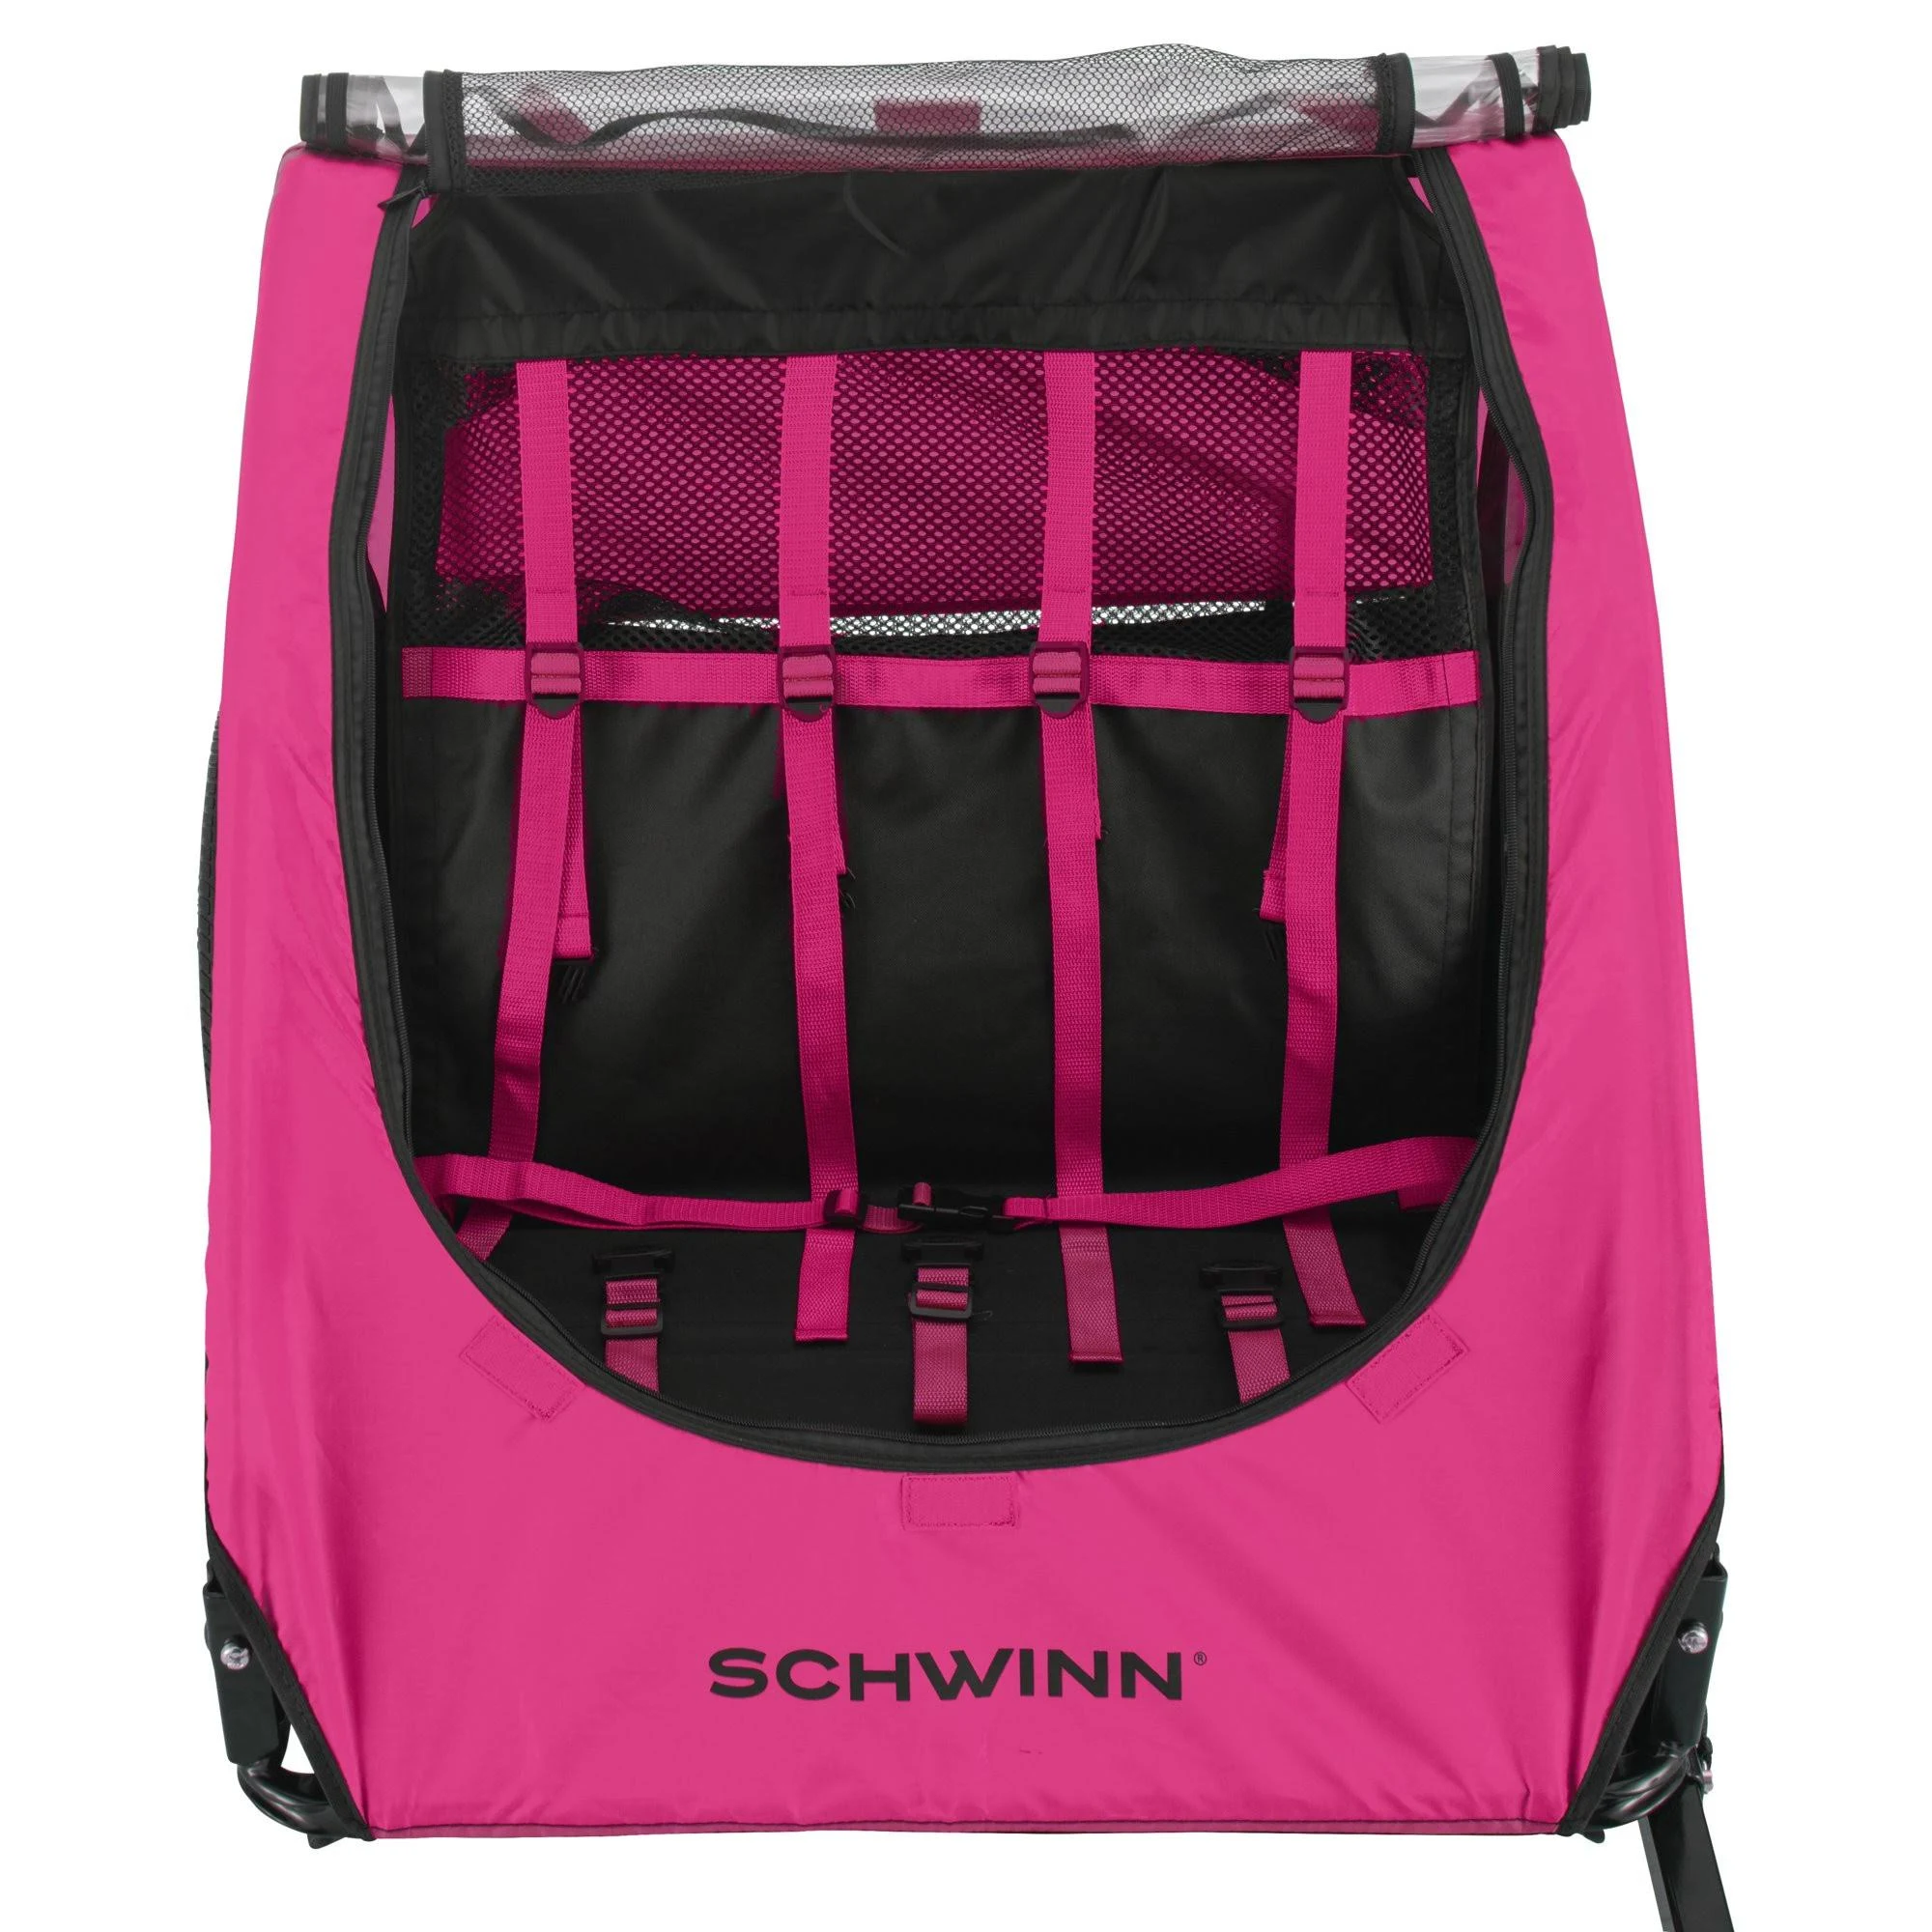 Schwinn Shuttle Foldable Bike Trailer, 2 Passengers, Pink / Black